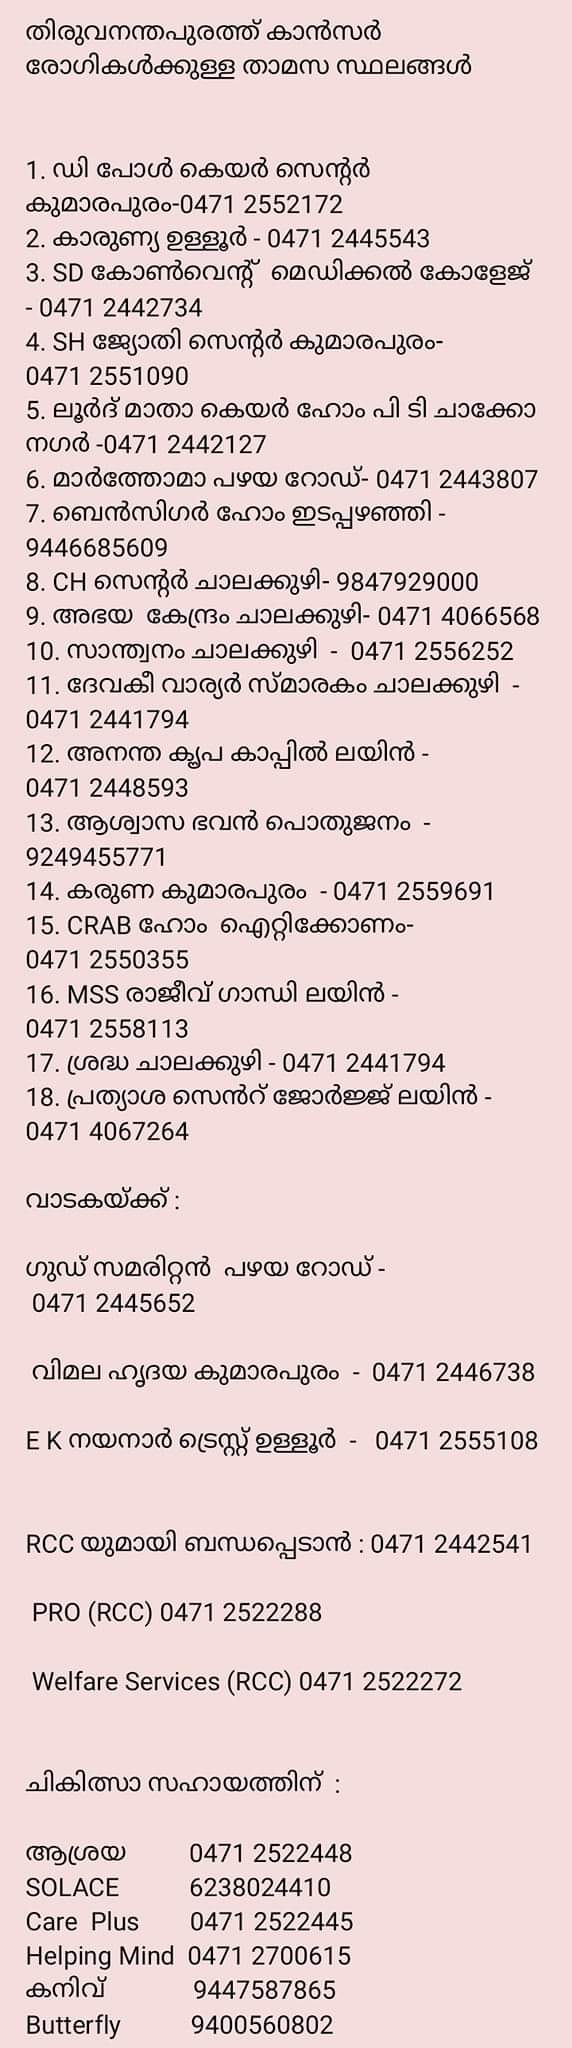 Cancer Care Center Contact Numbers at Thiruvananthapuram